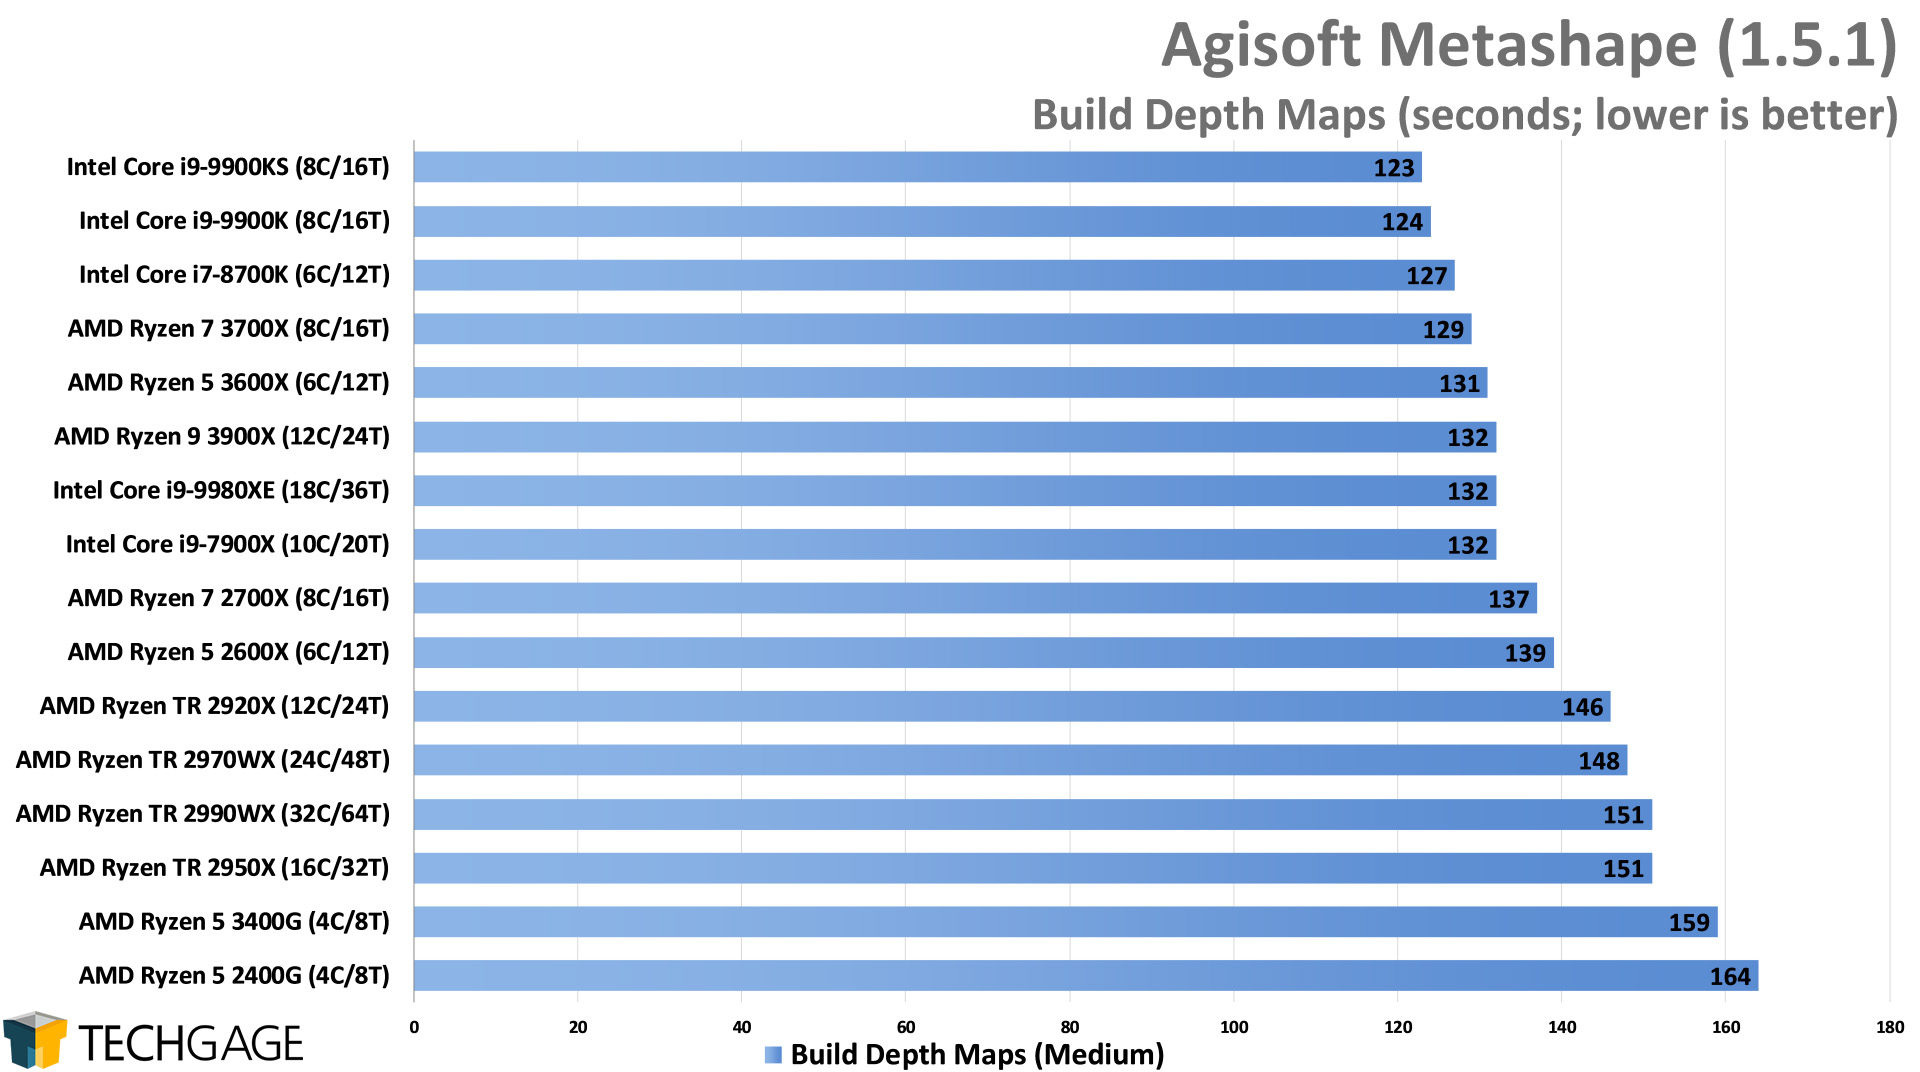 Agisoft Metashape Photogrammetry Performance - Build Depth Maps (Intel Core i9-9900KS)